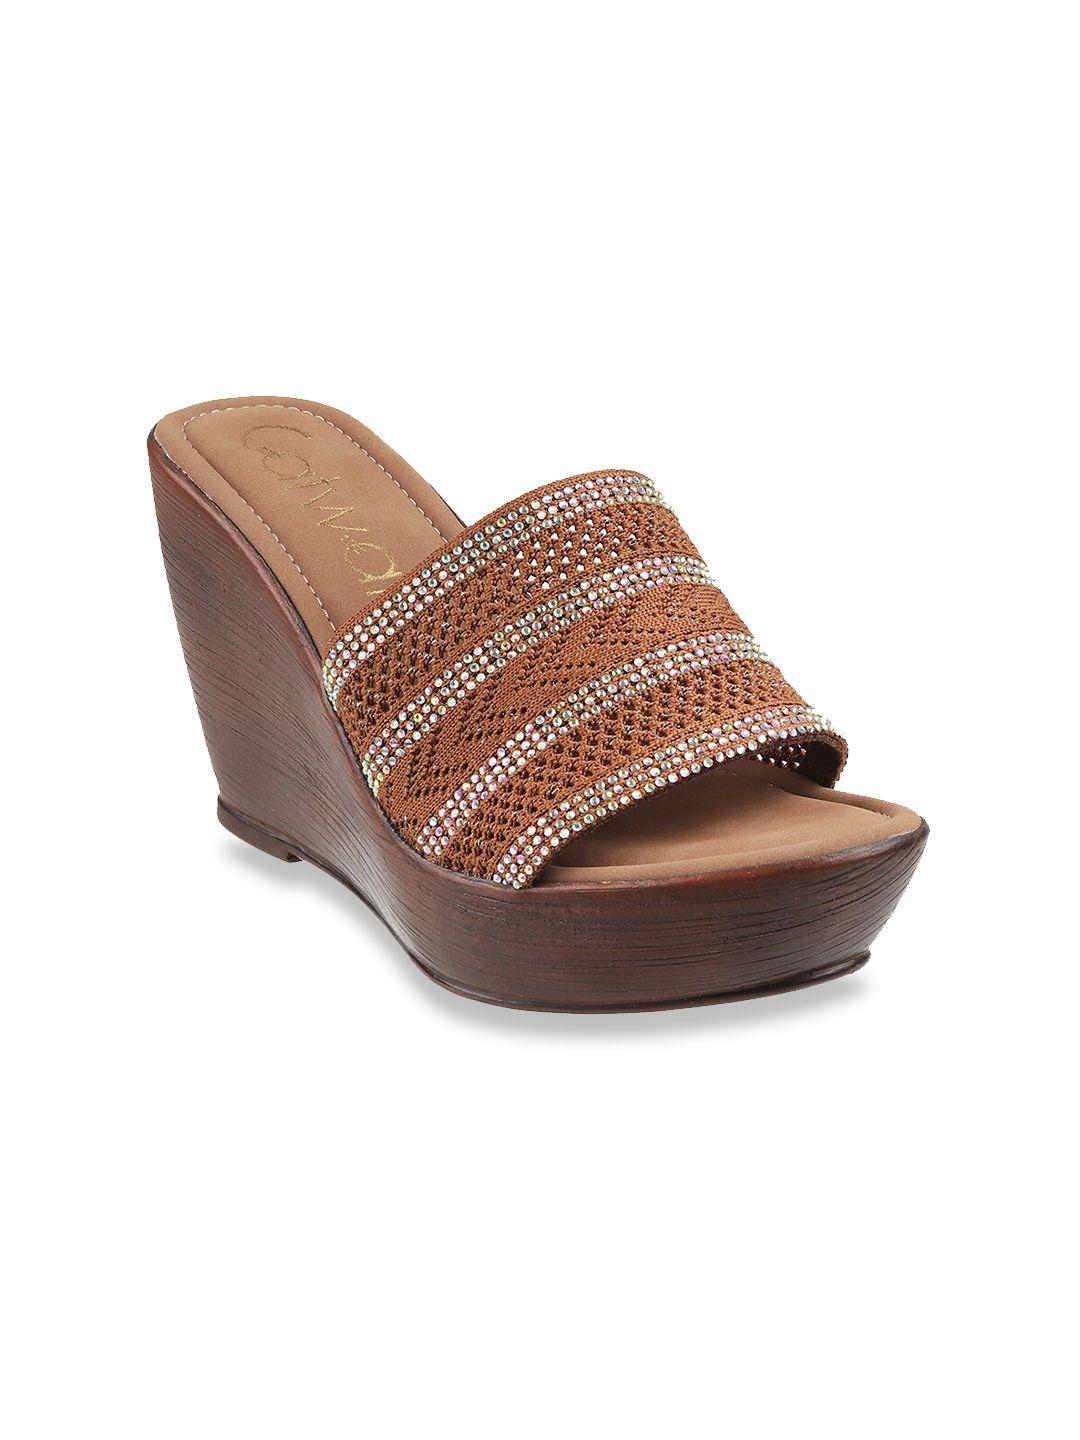 catwalk women brown & silver-toned embellished wedge heels